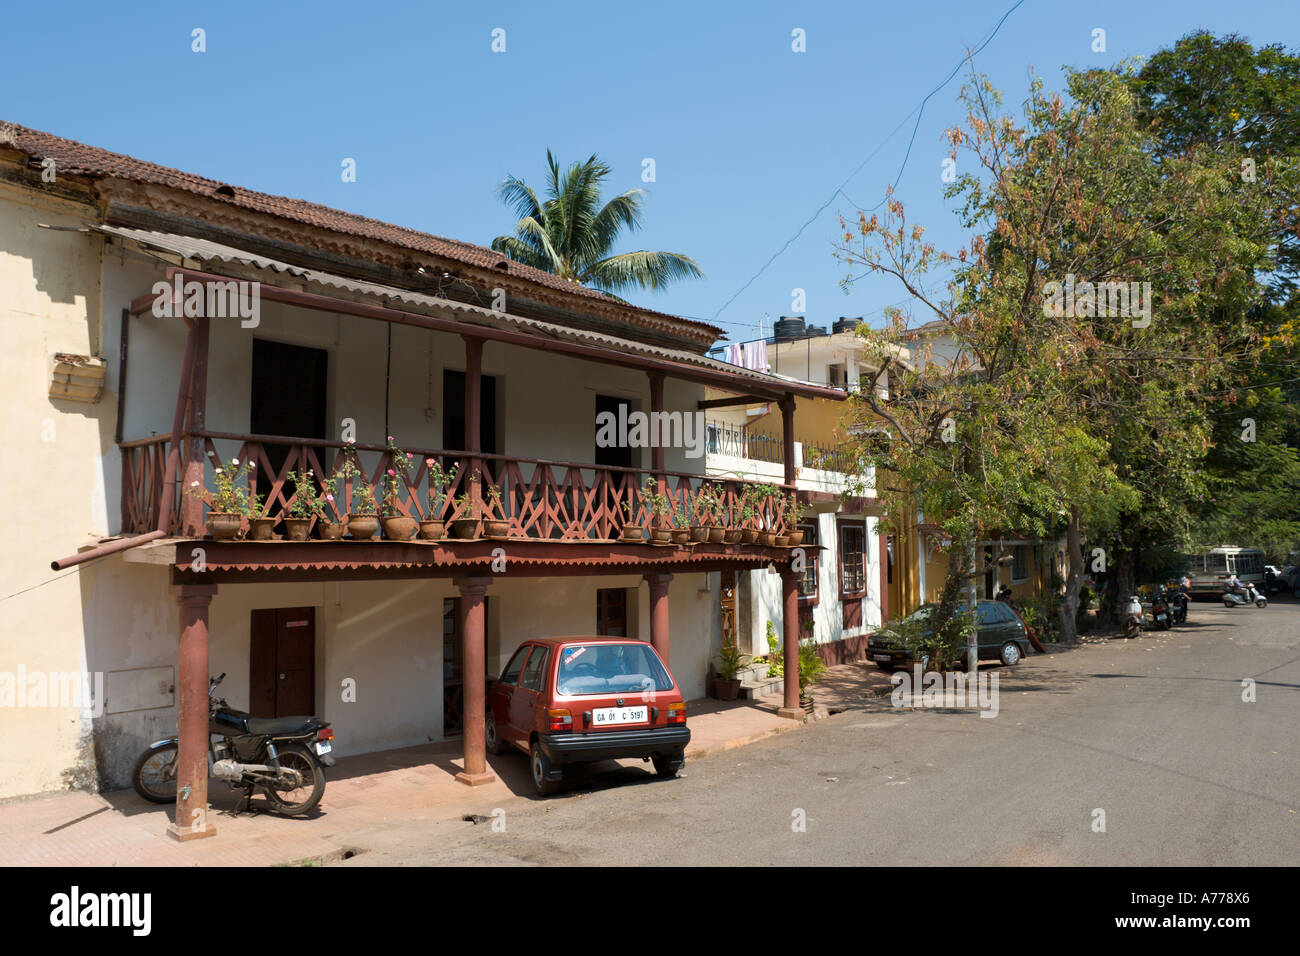 Houses in the old historic quarter of Fontainhas, Panaji or Panjim (the Goan capital city), Goa, India Stock Photo